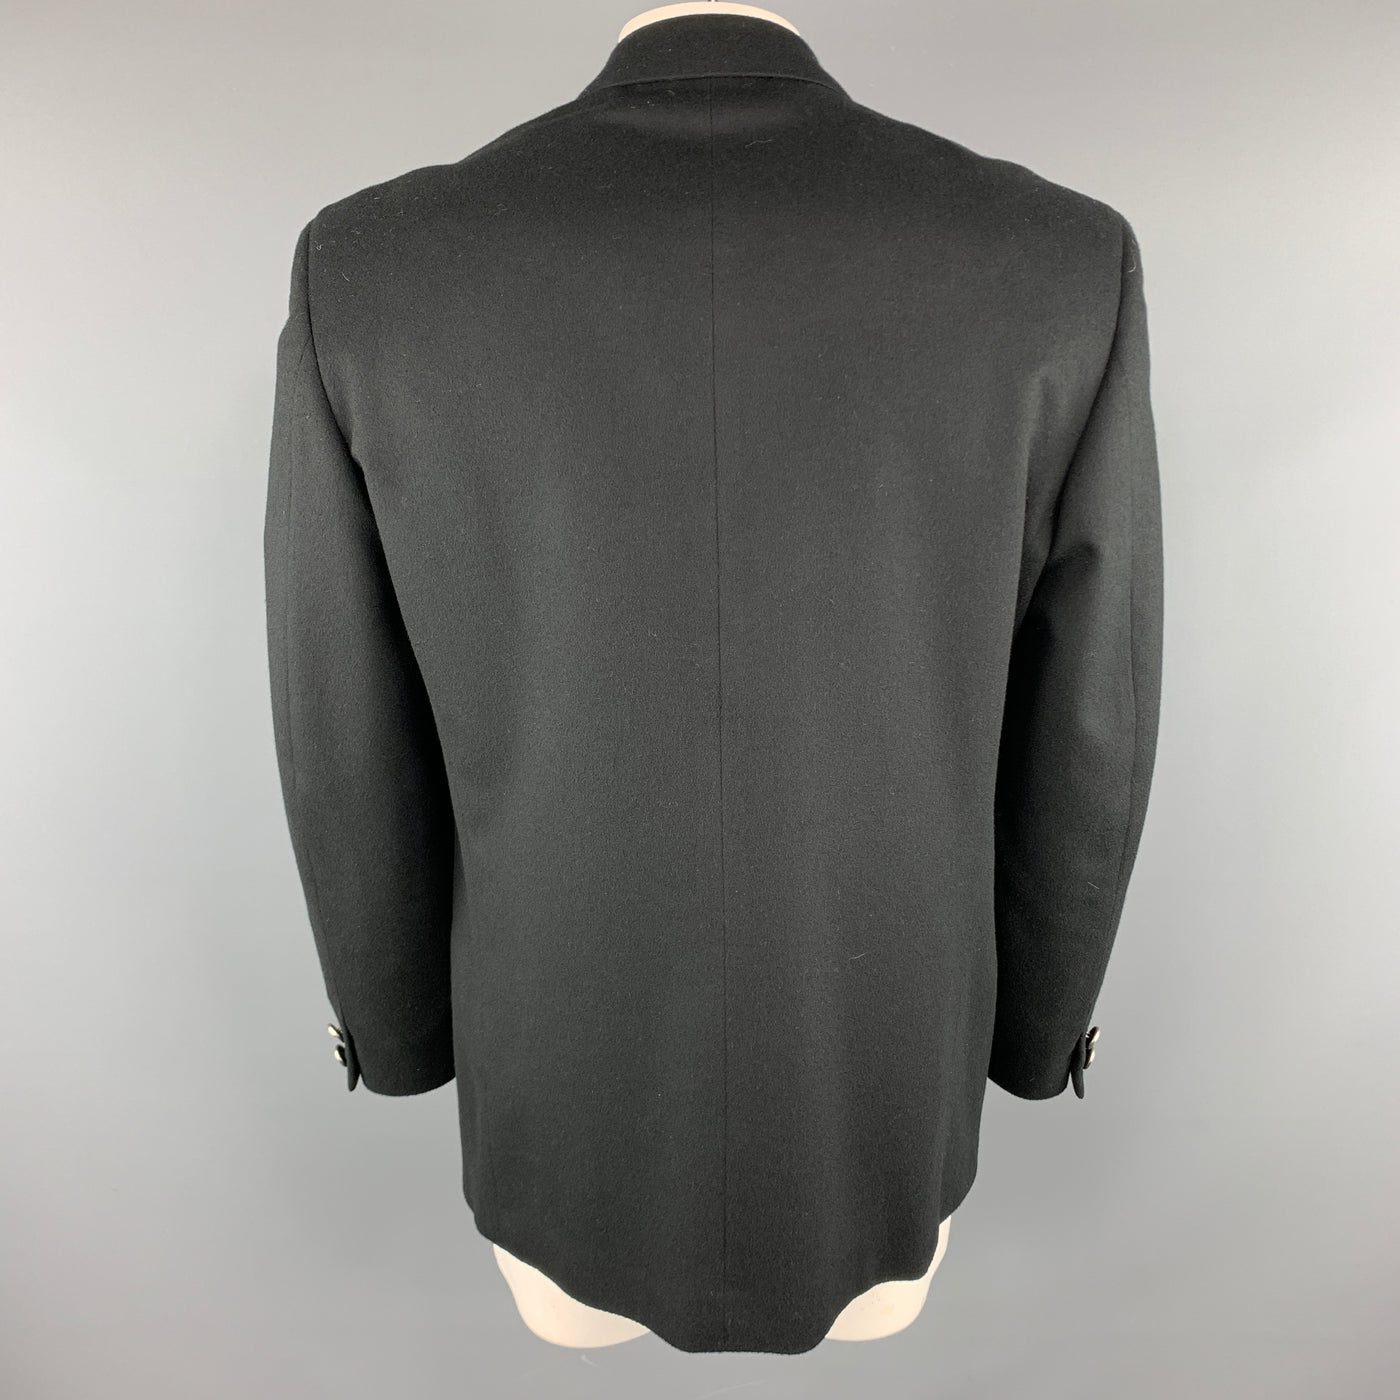 Vintage VERSUS by GIANNI VERSACE Size 42  Black Wool / Cashmere Embossed Sport Coat